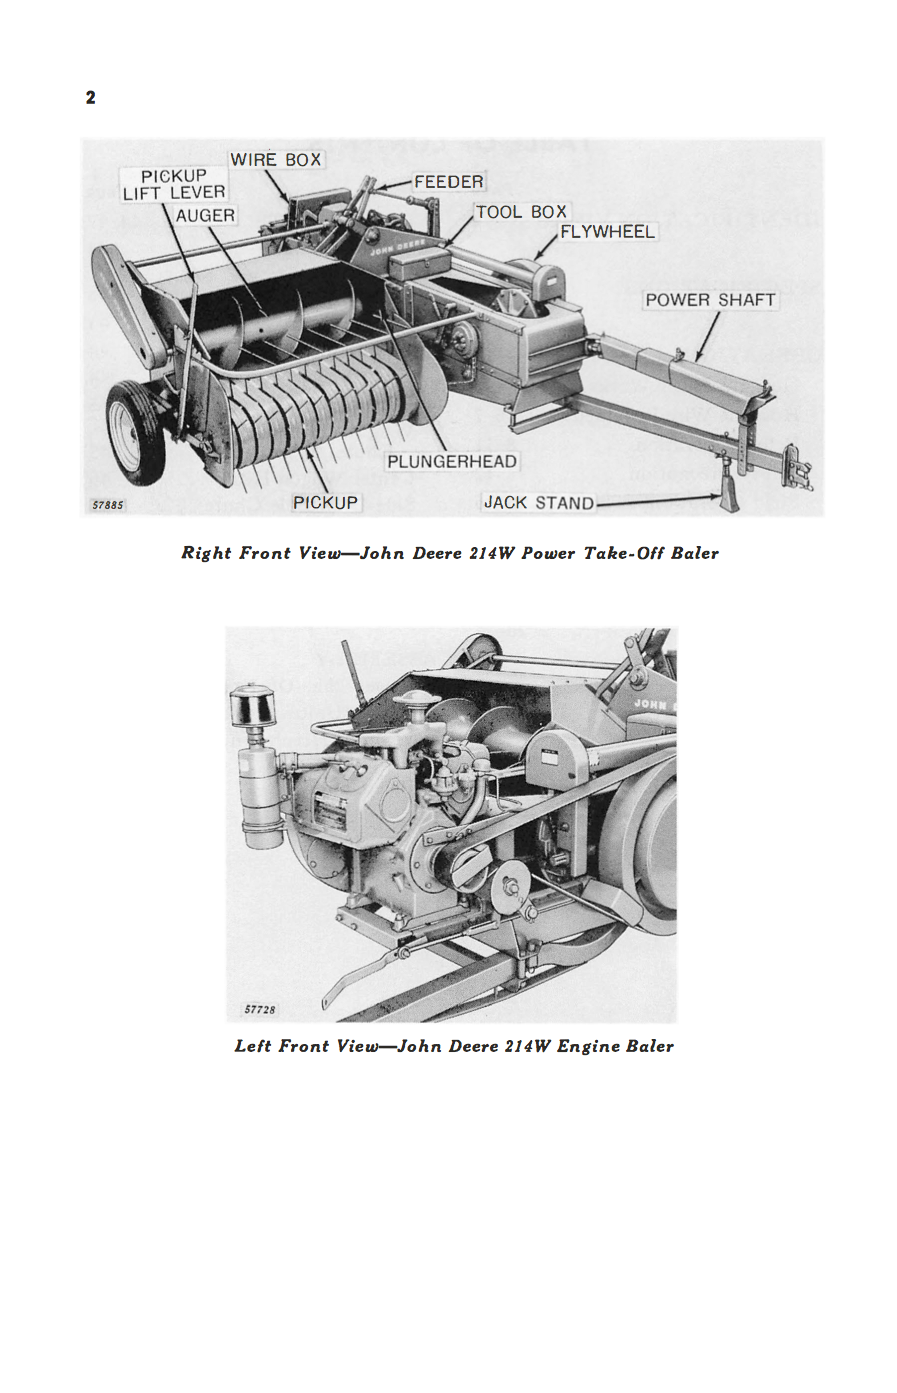 John Deere 214W Automatic Pickup Baler - Operator's Manual - Ag Manuals - A Provider of Digital Farm Manuals - 2